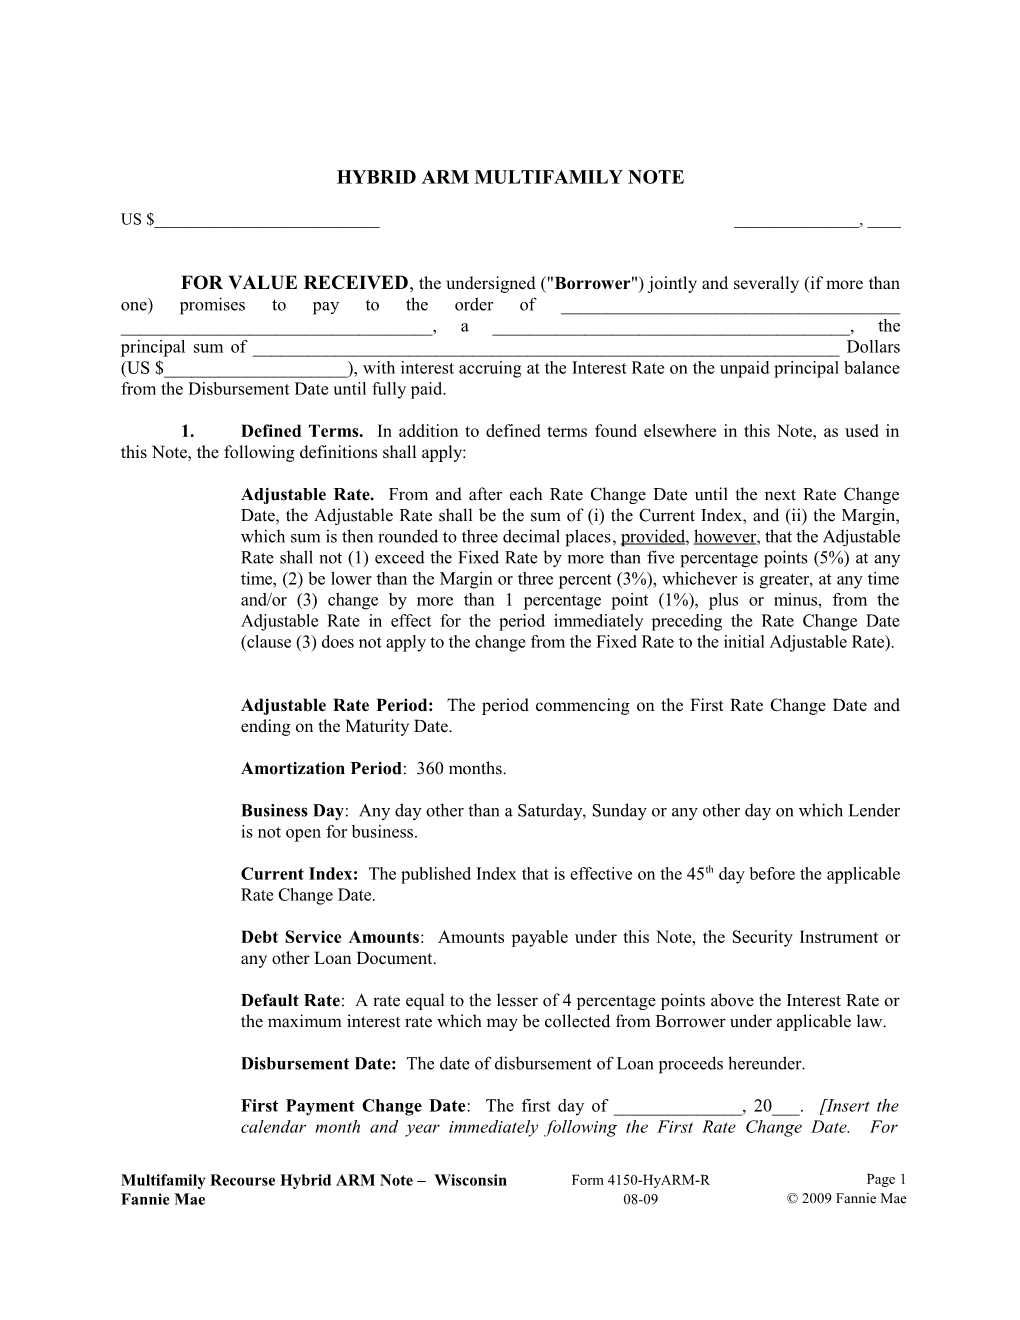 Multifamily Form 4150-Hyarm-R Wisconsin